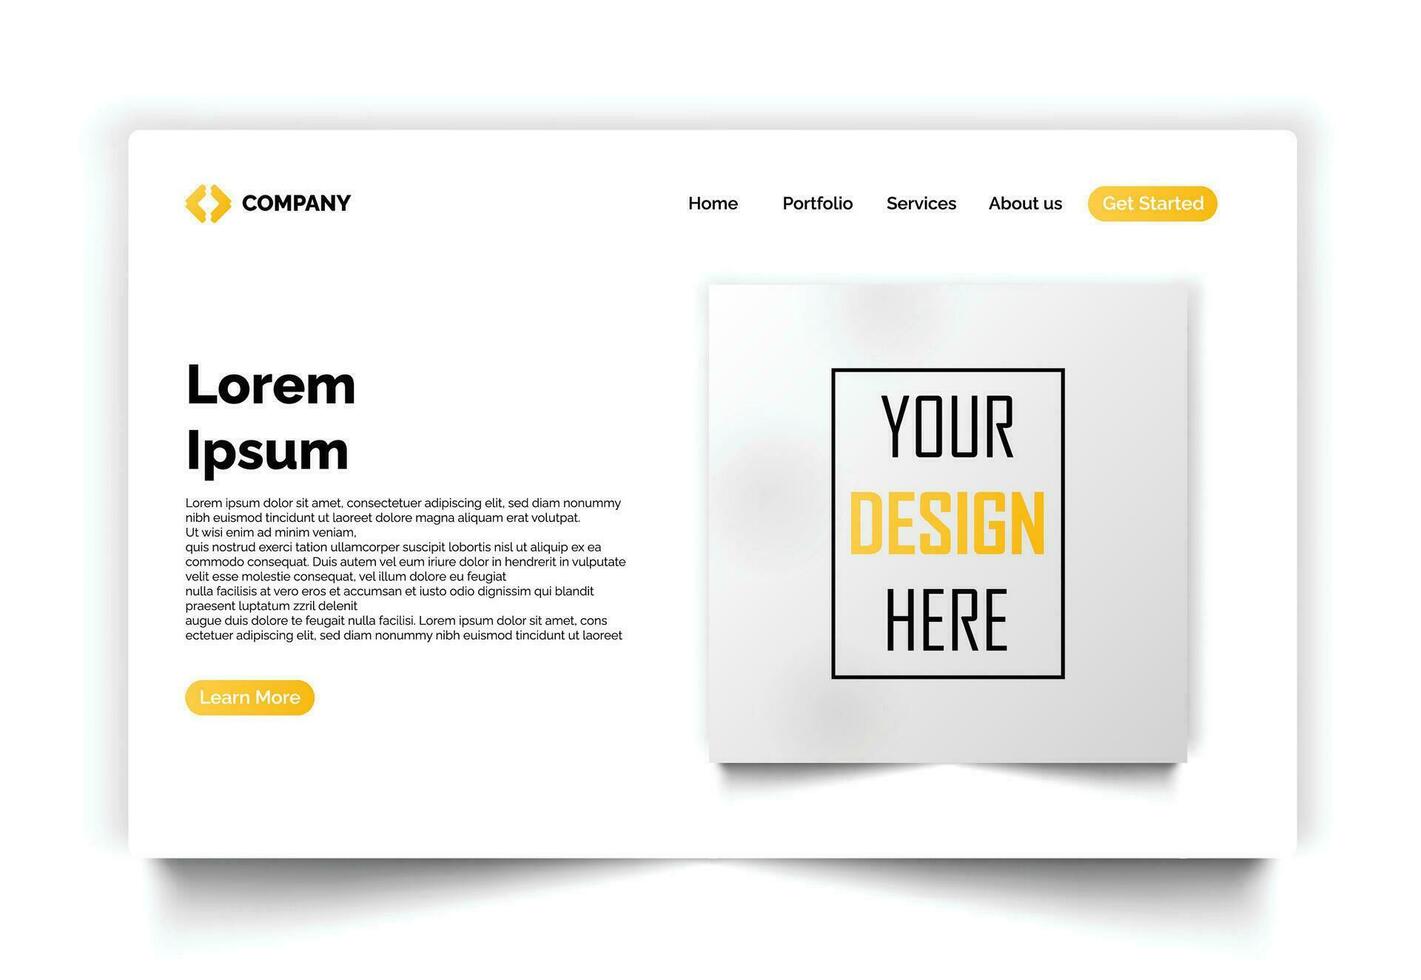 Template design, concepts for website development, vector illustration